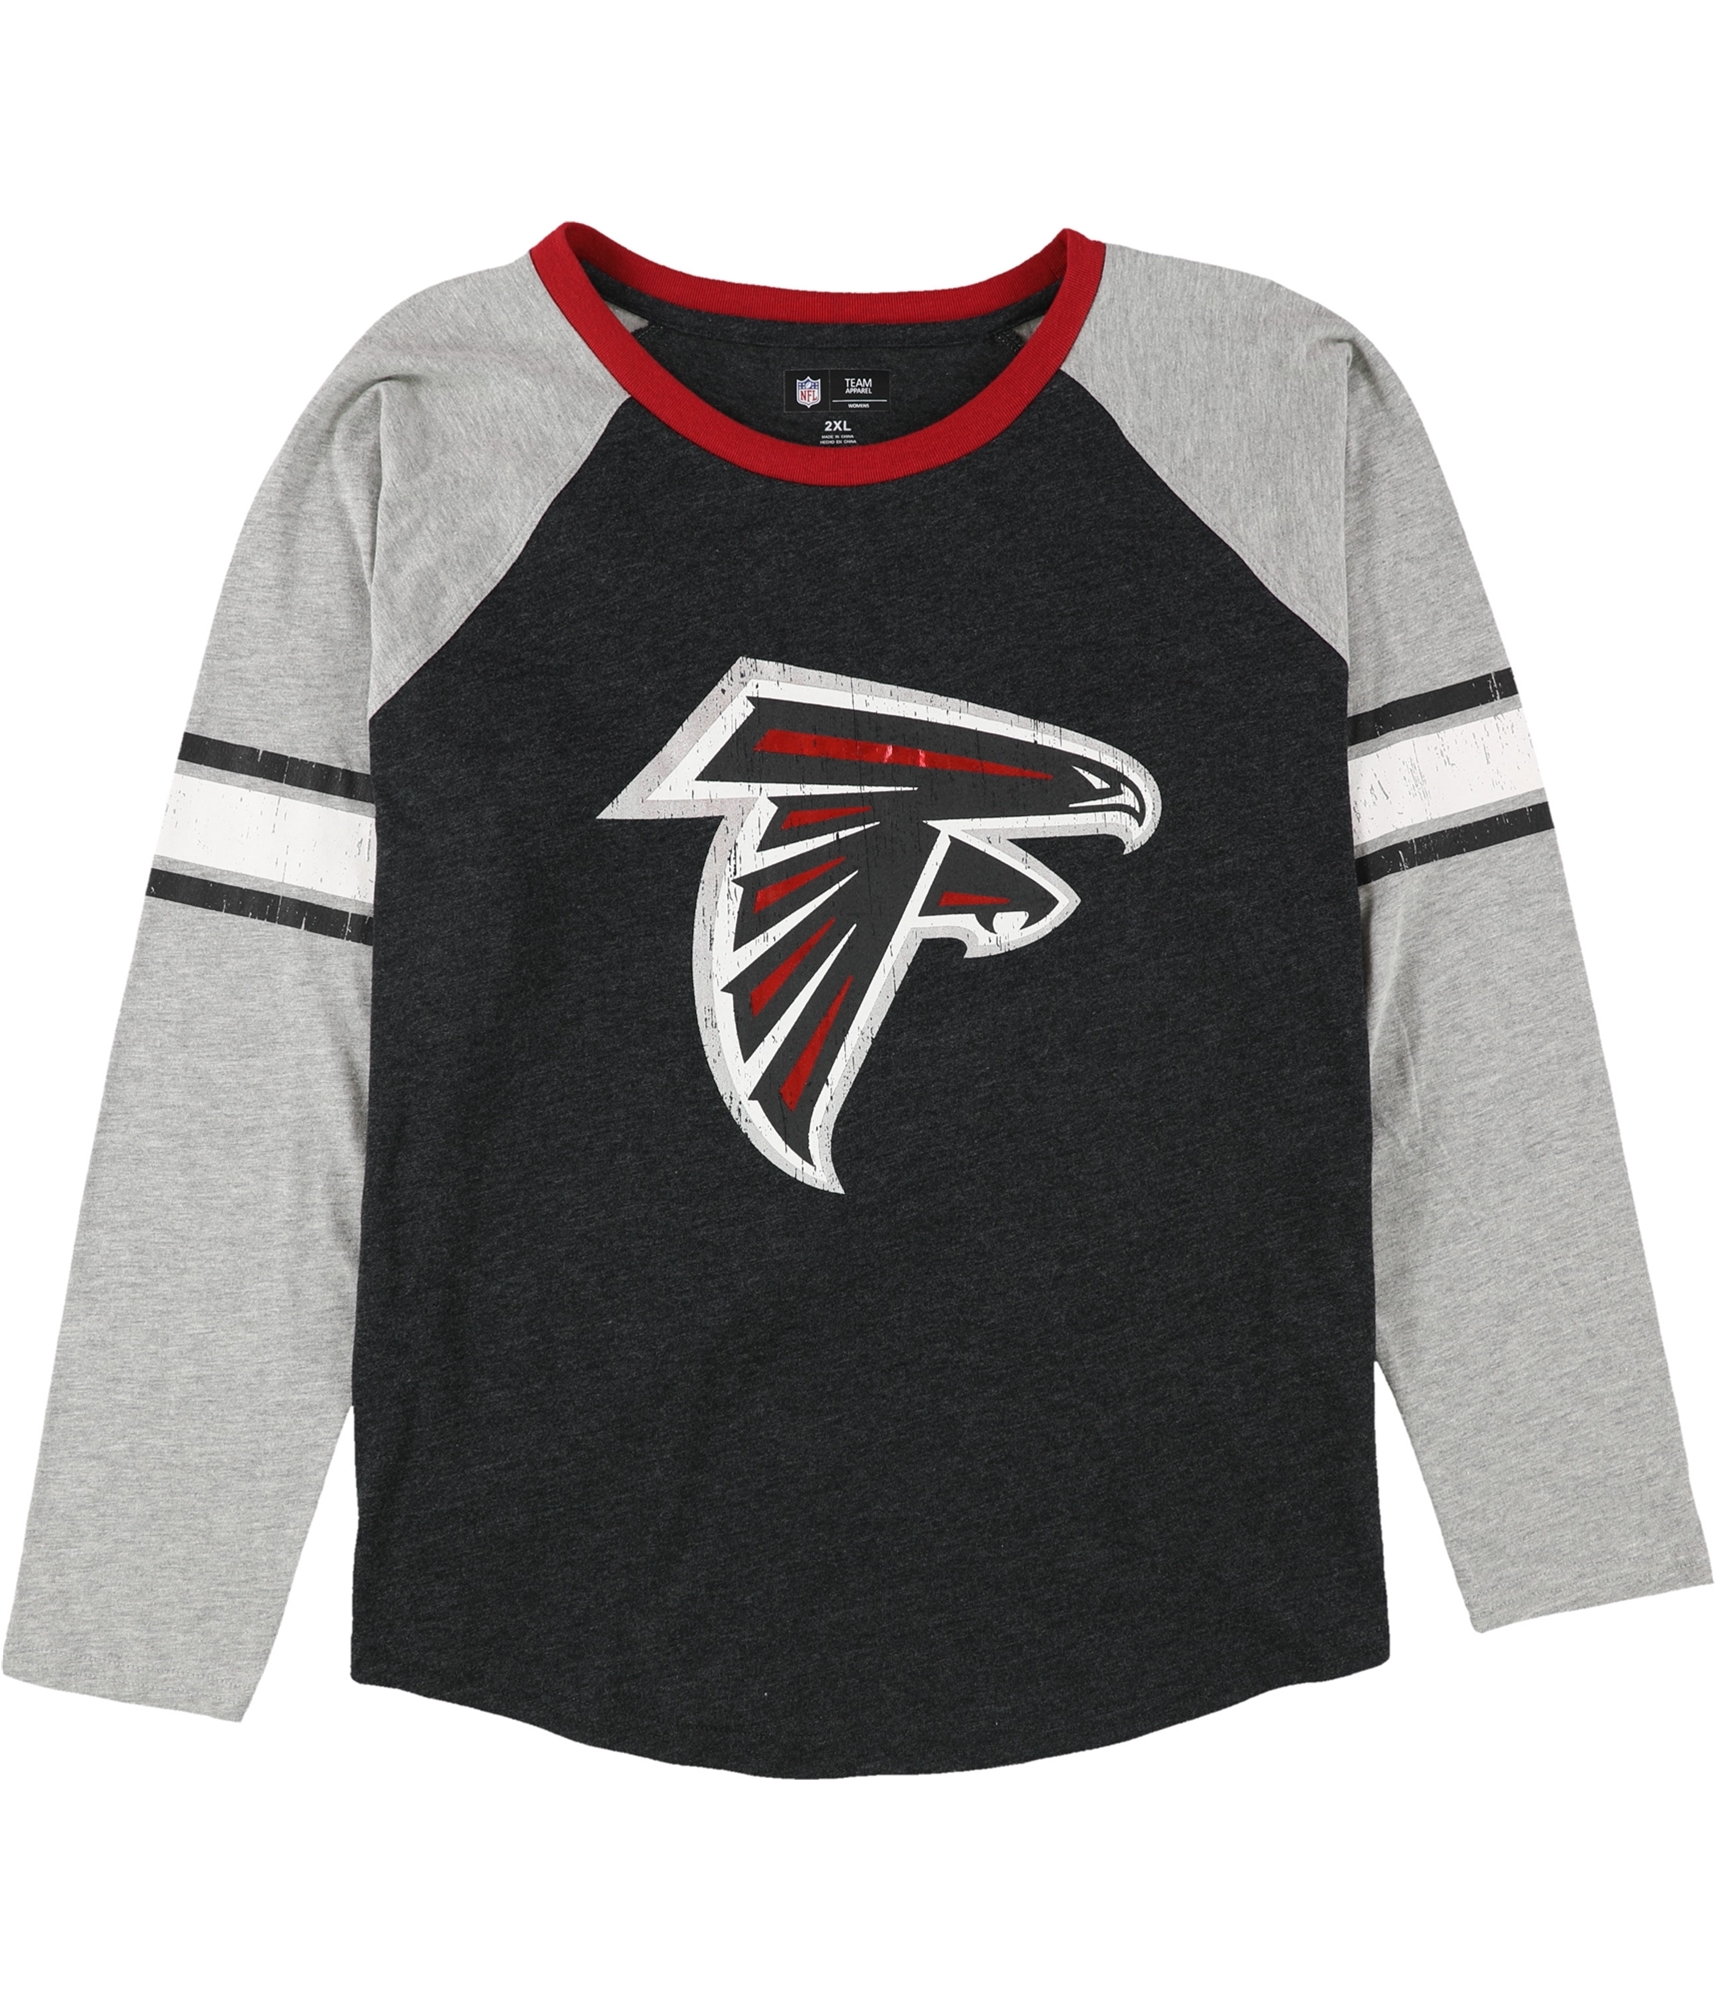 Buy a Womens G-III Sports Atlanta Falcons Graphic T-Shirt Online